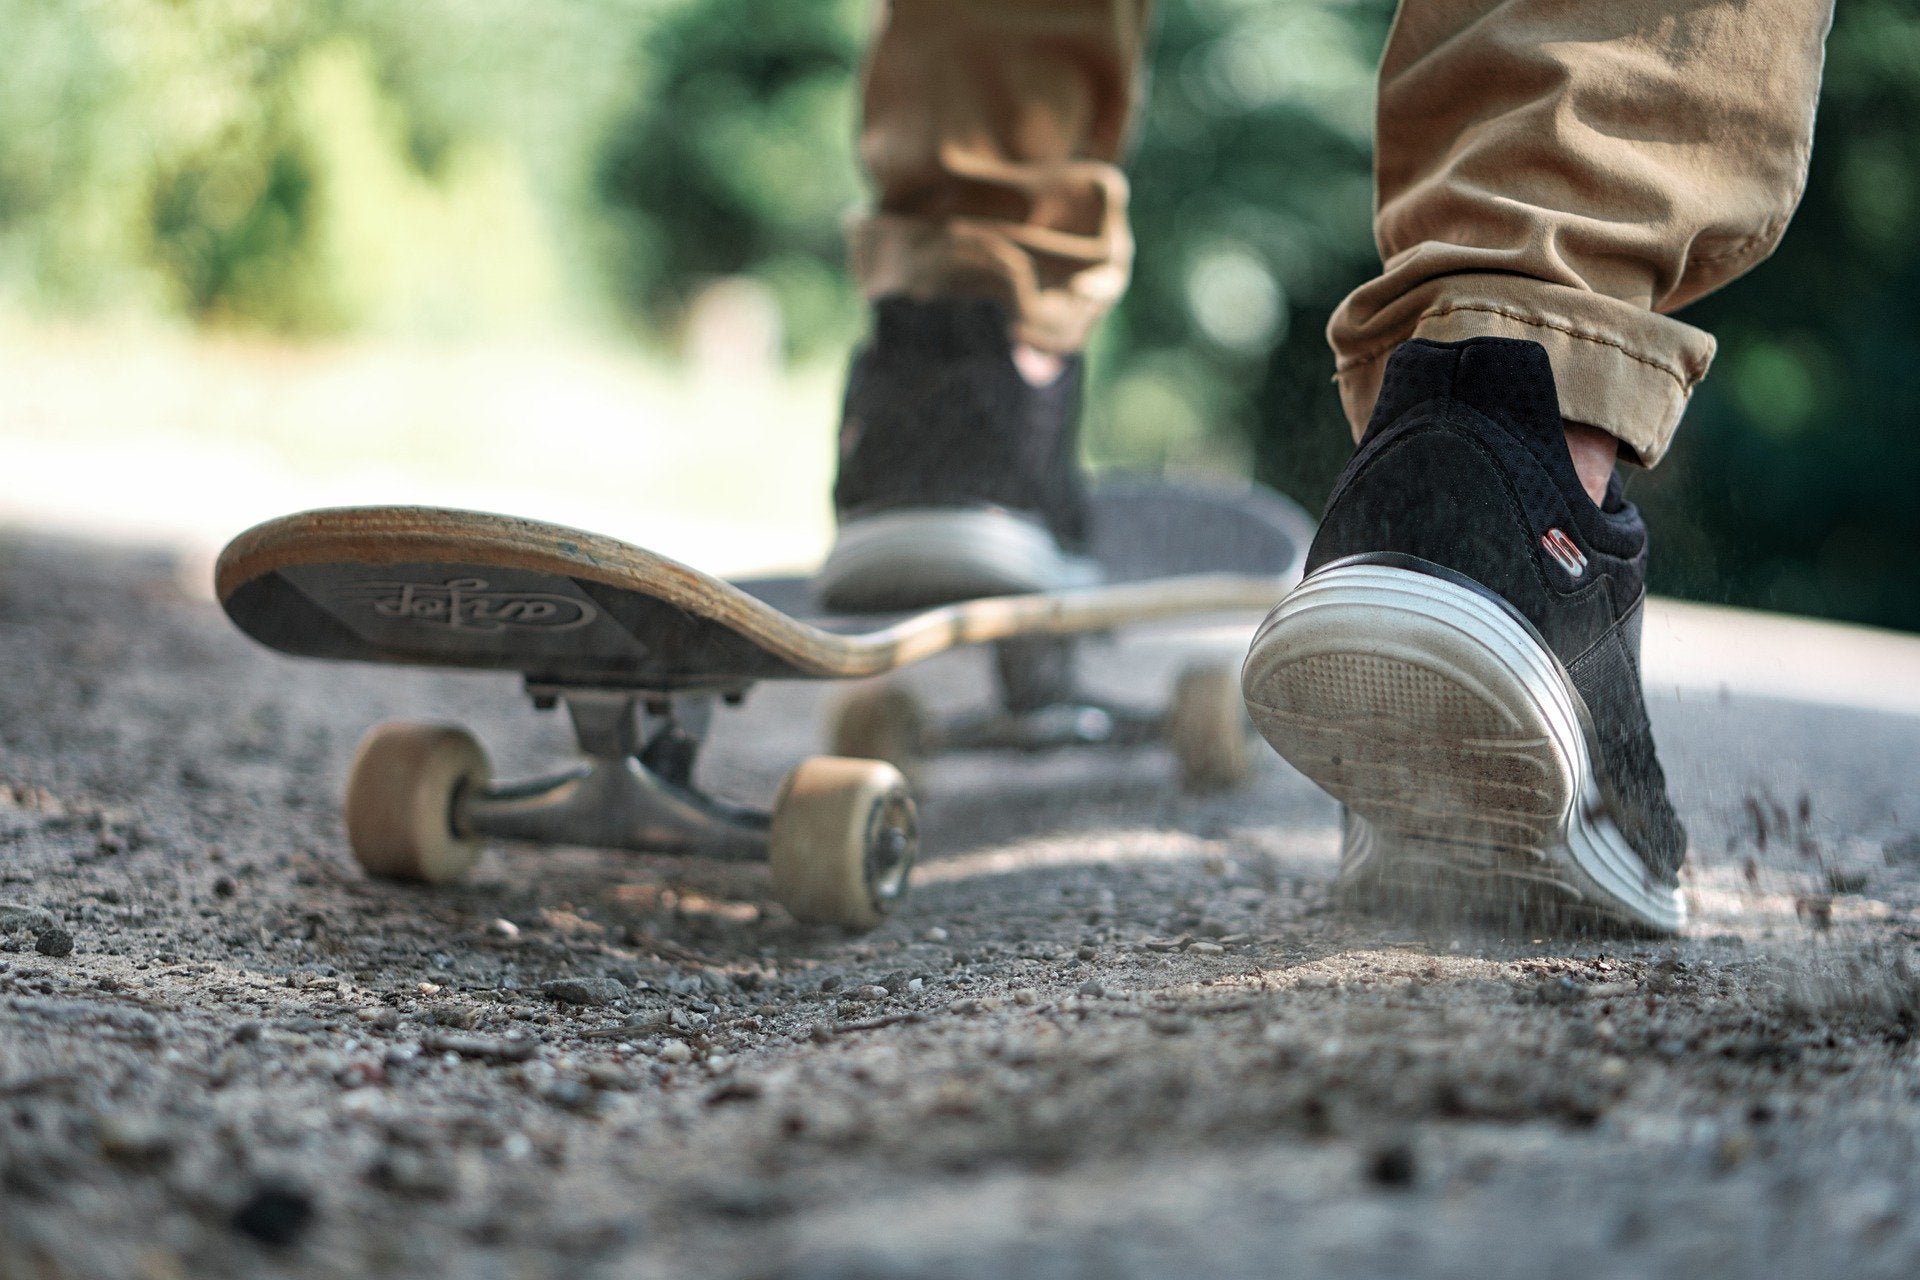 40 Best Skateboarding Accessories